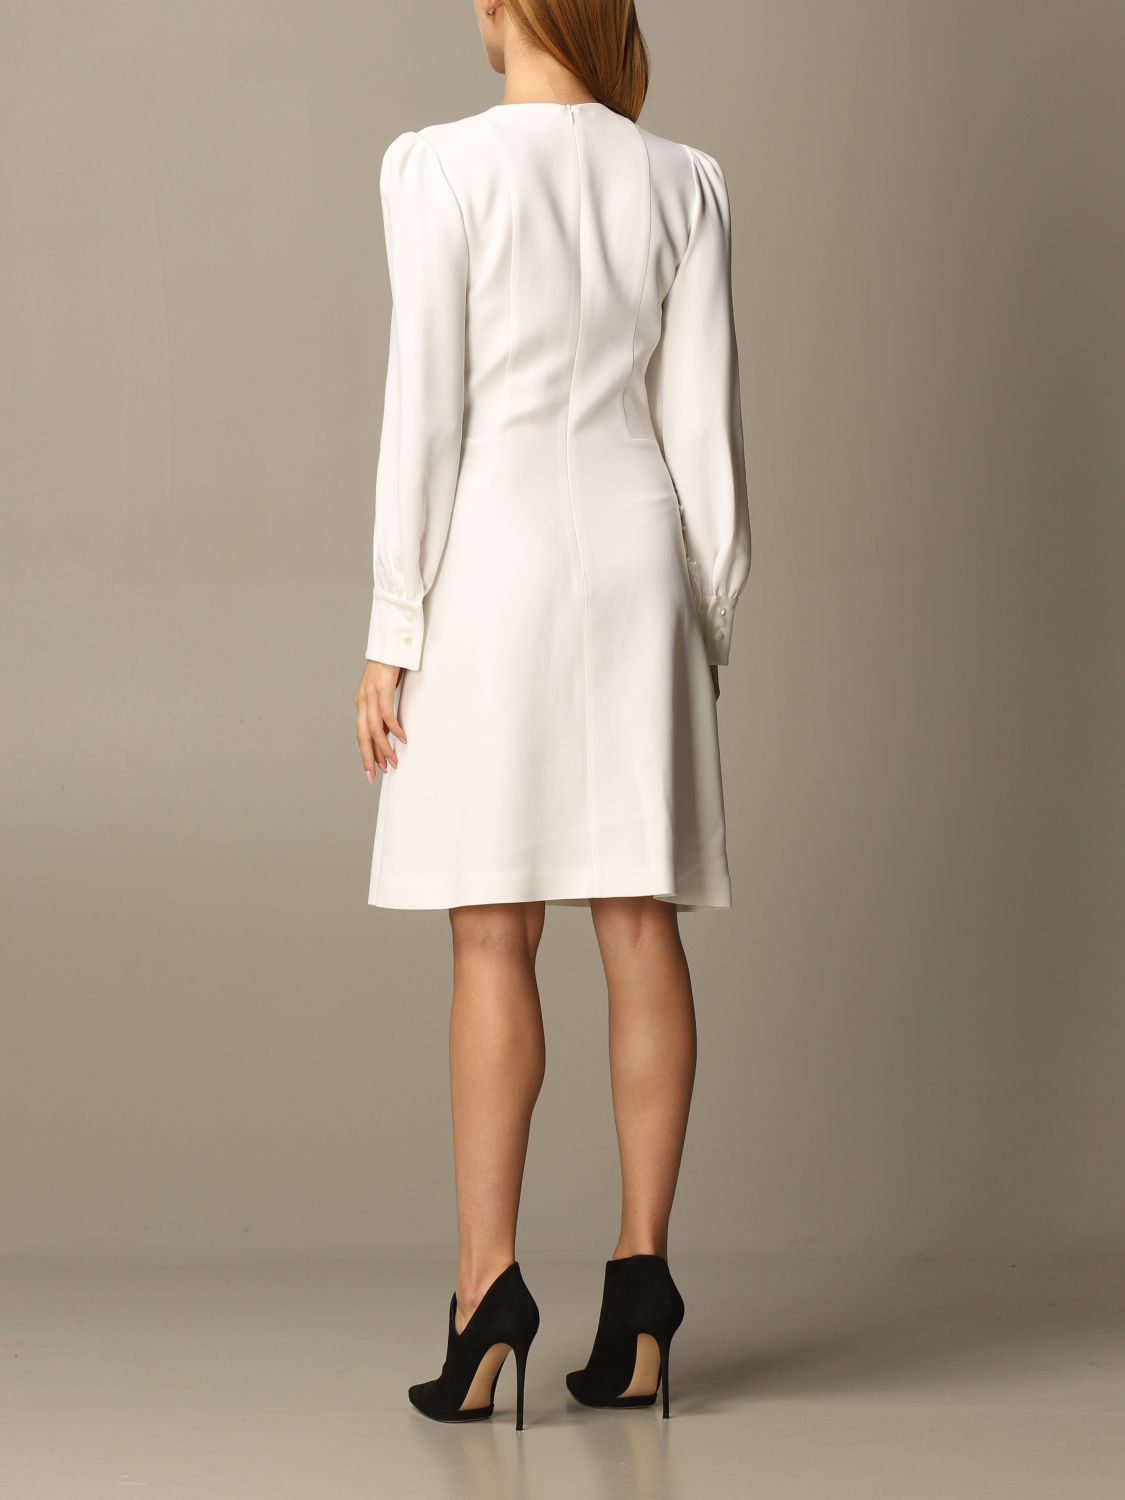 Ermanno Scervino Outlet: dress for woman - White | Ermanno Scervino